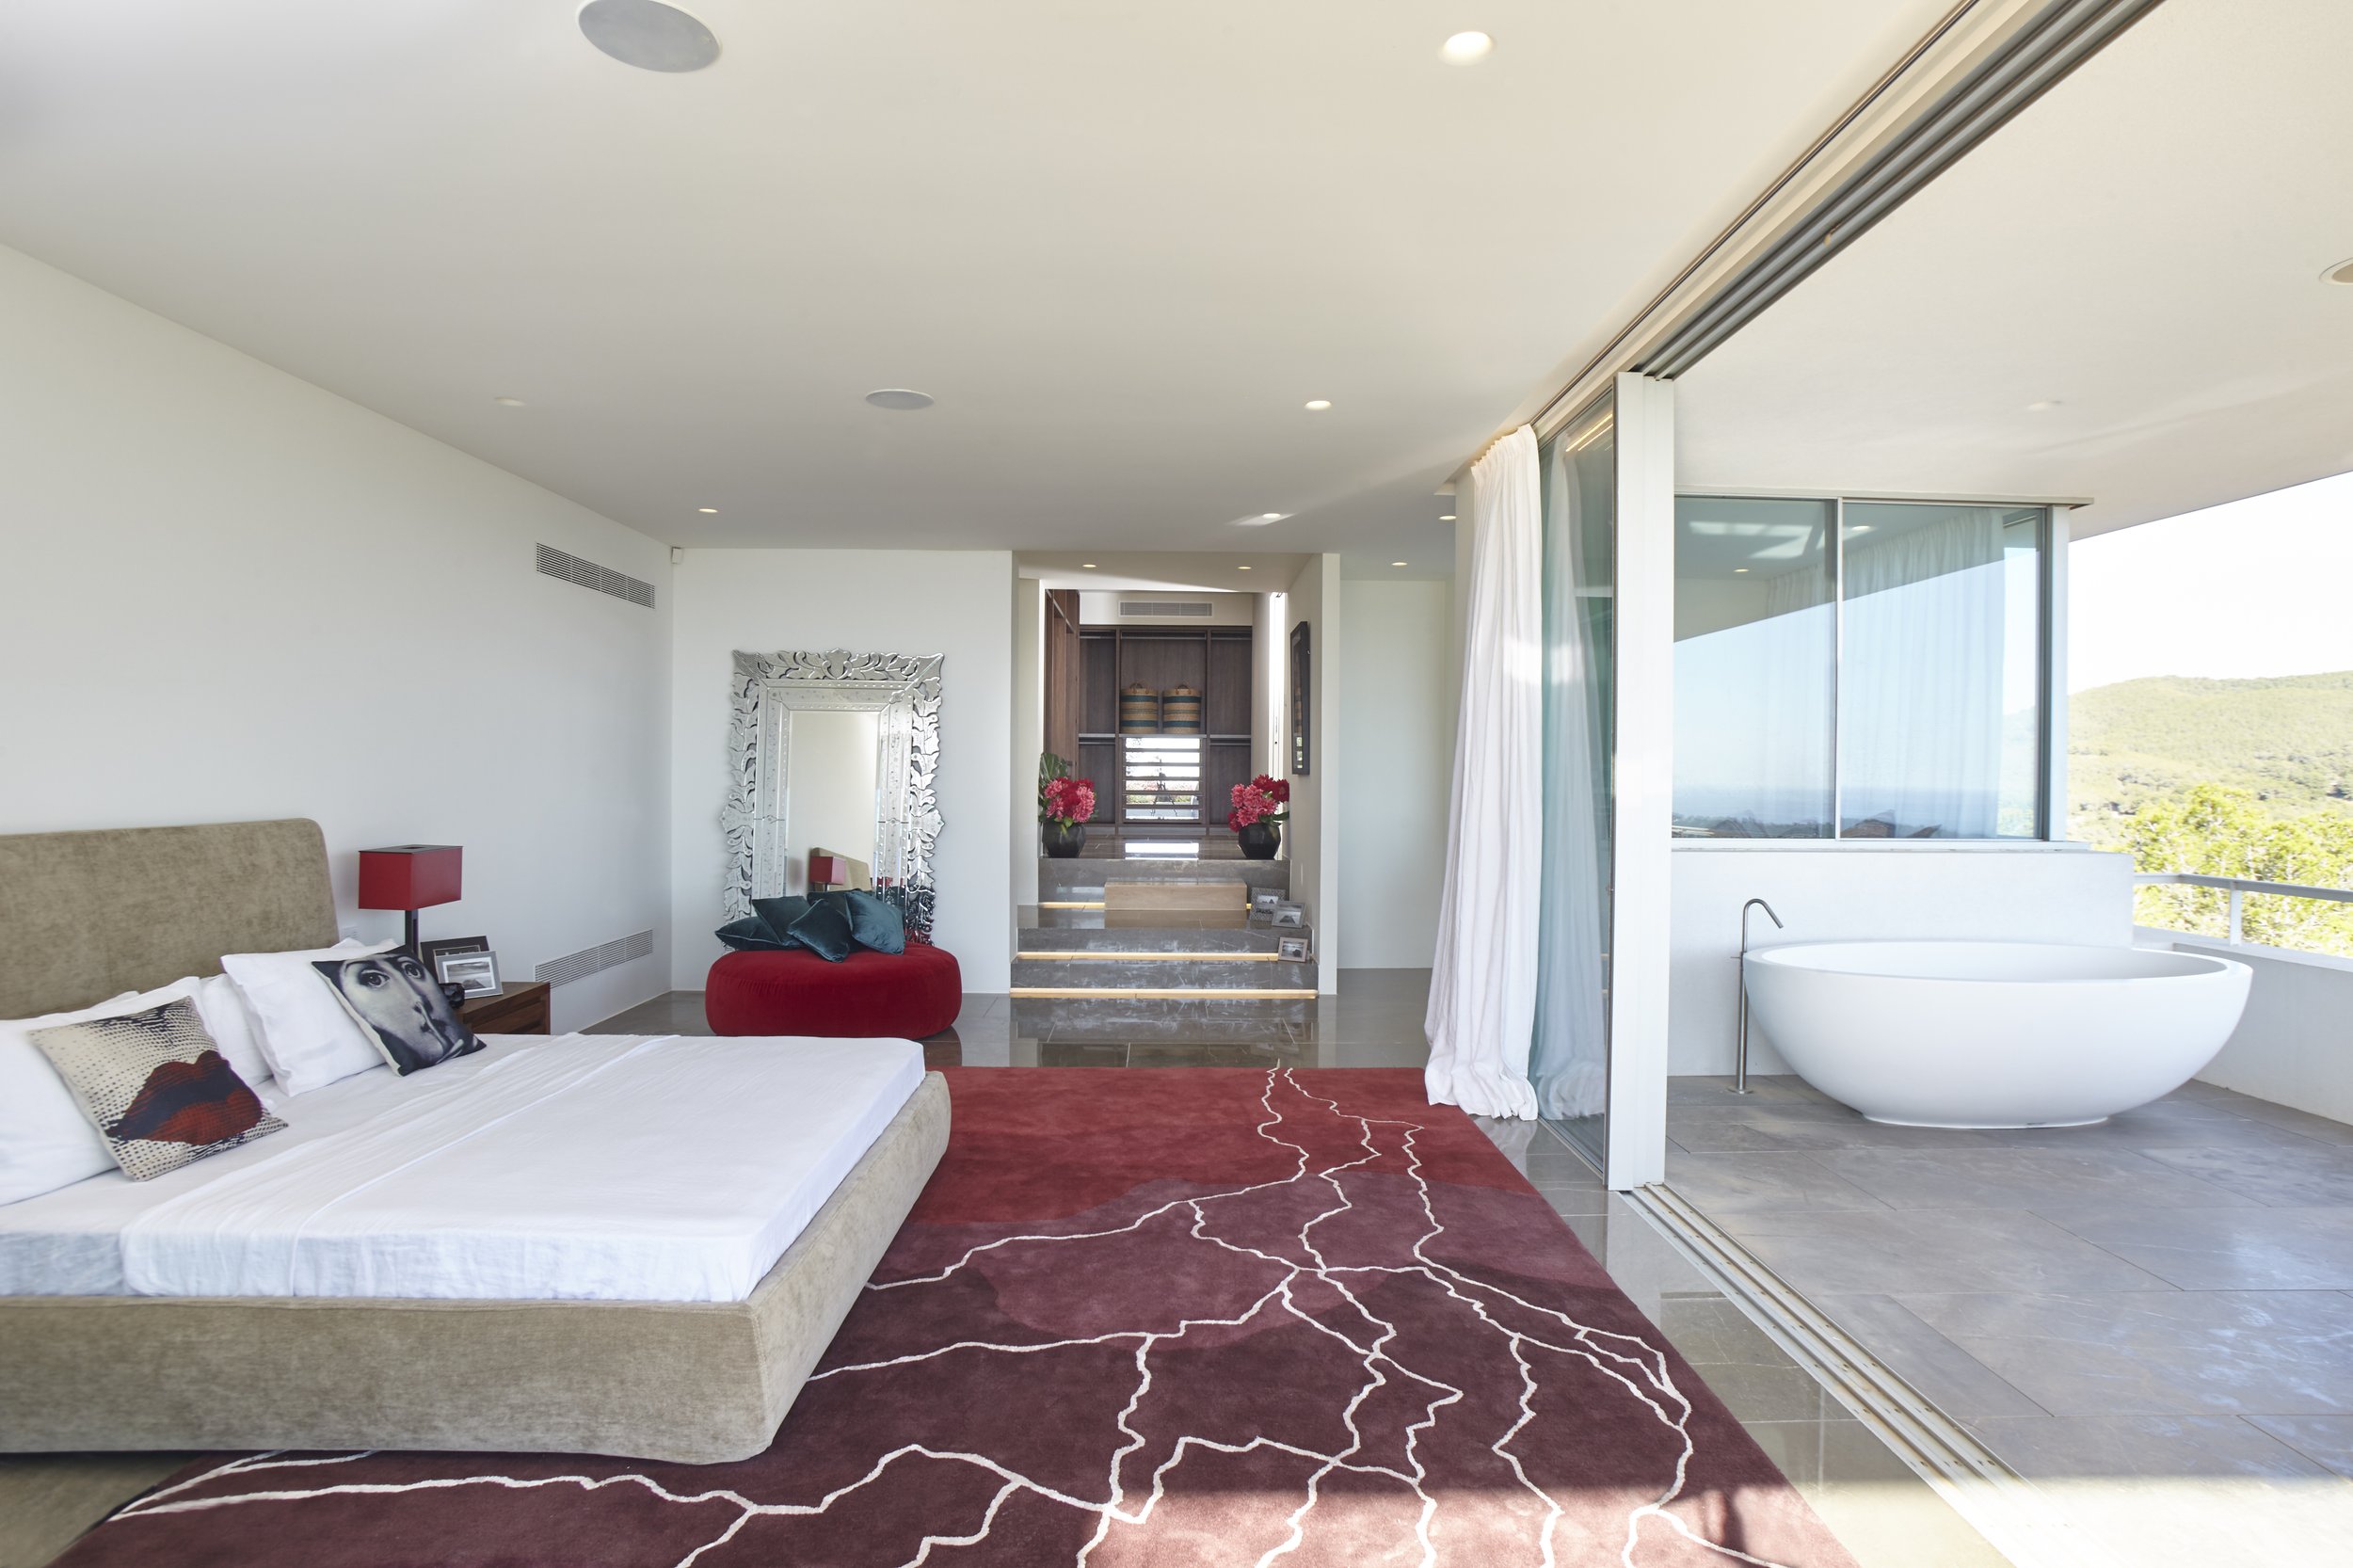 Francis York  Villa Adastra: Modern Mansion With Panoramic Island Views in Ibiza 12.jpg